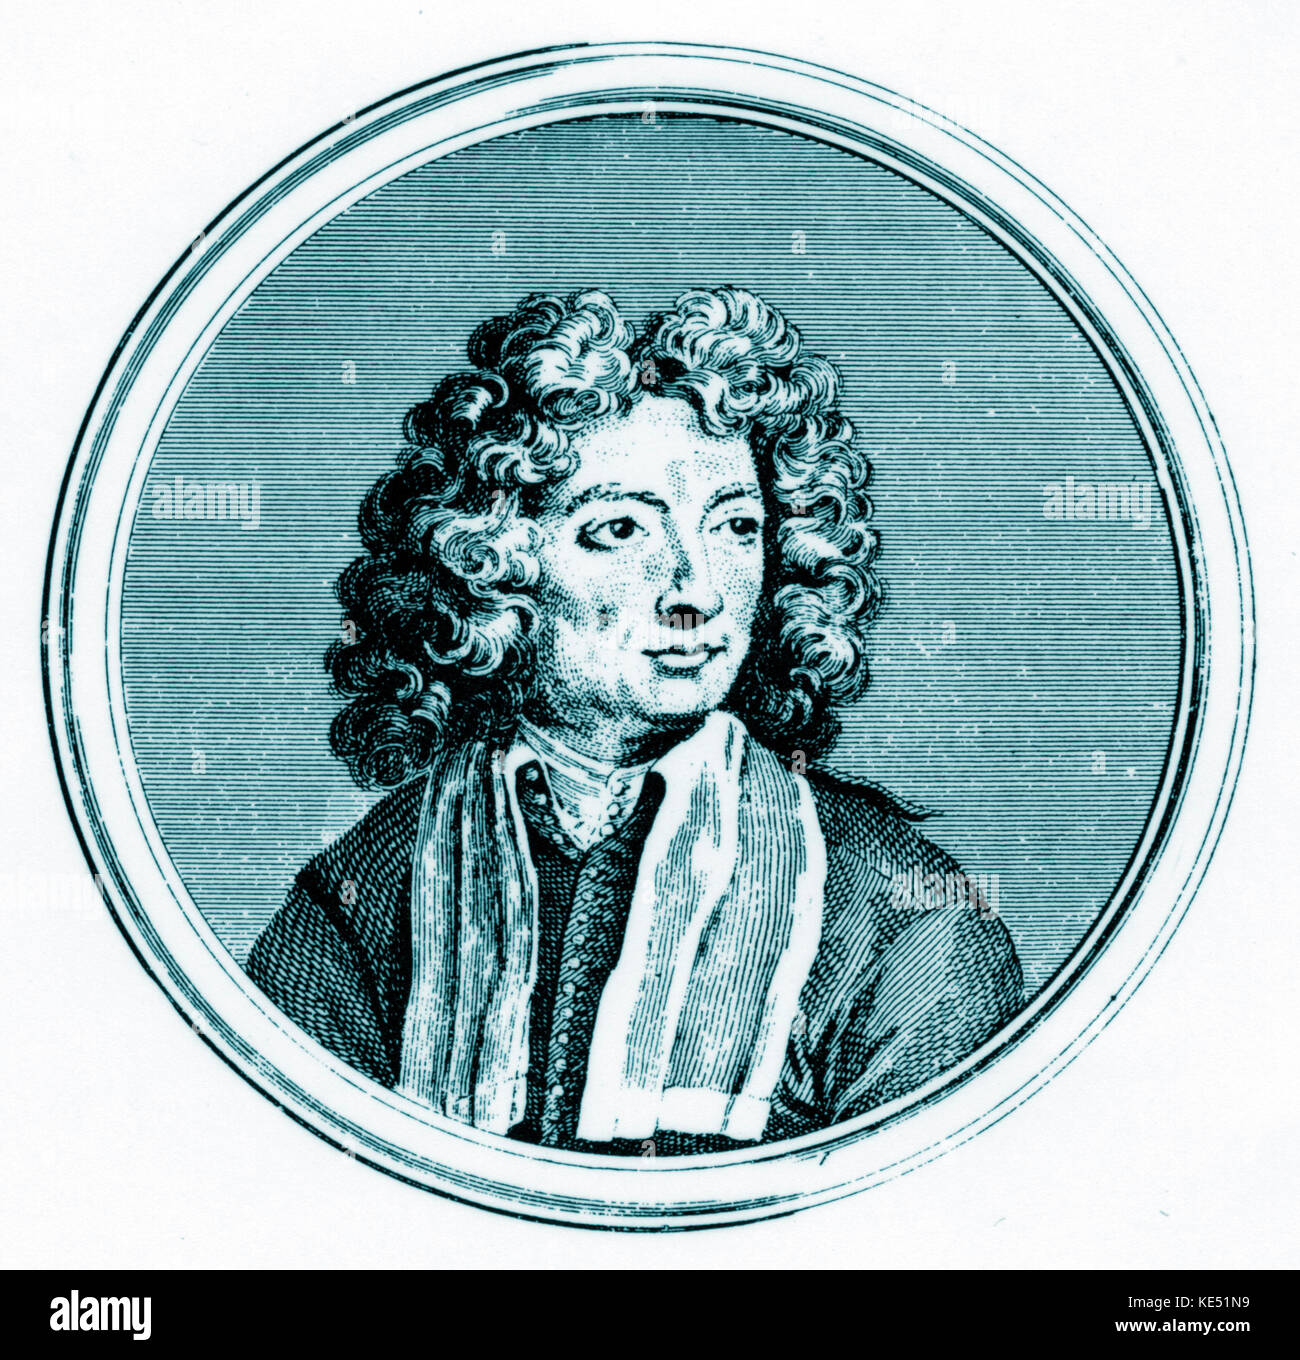 Arcangelo Corelli portrait. Italienischer Komponist und Violinist. 17 Februar 1653 - 8. Januar 1713 Stockfoto